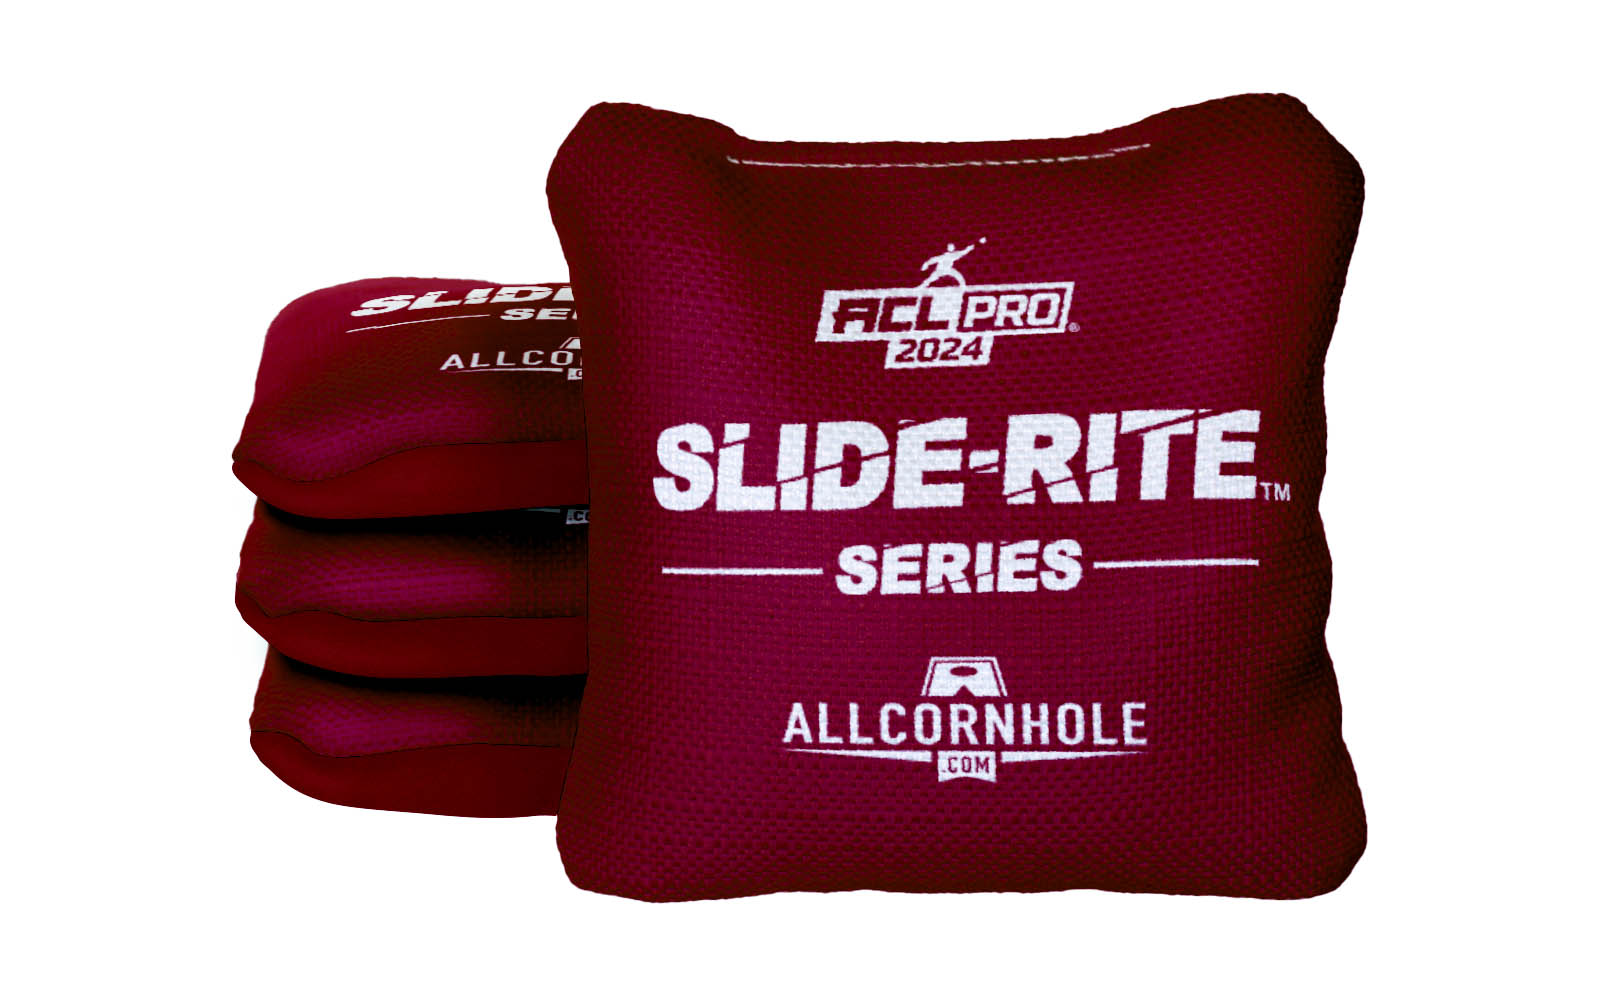 Officially Licensed Collegiate Cornhole Bags - Slide Rite - Set of 4 - Florida State University